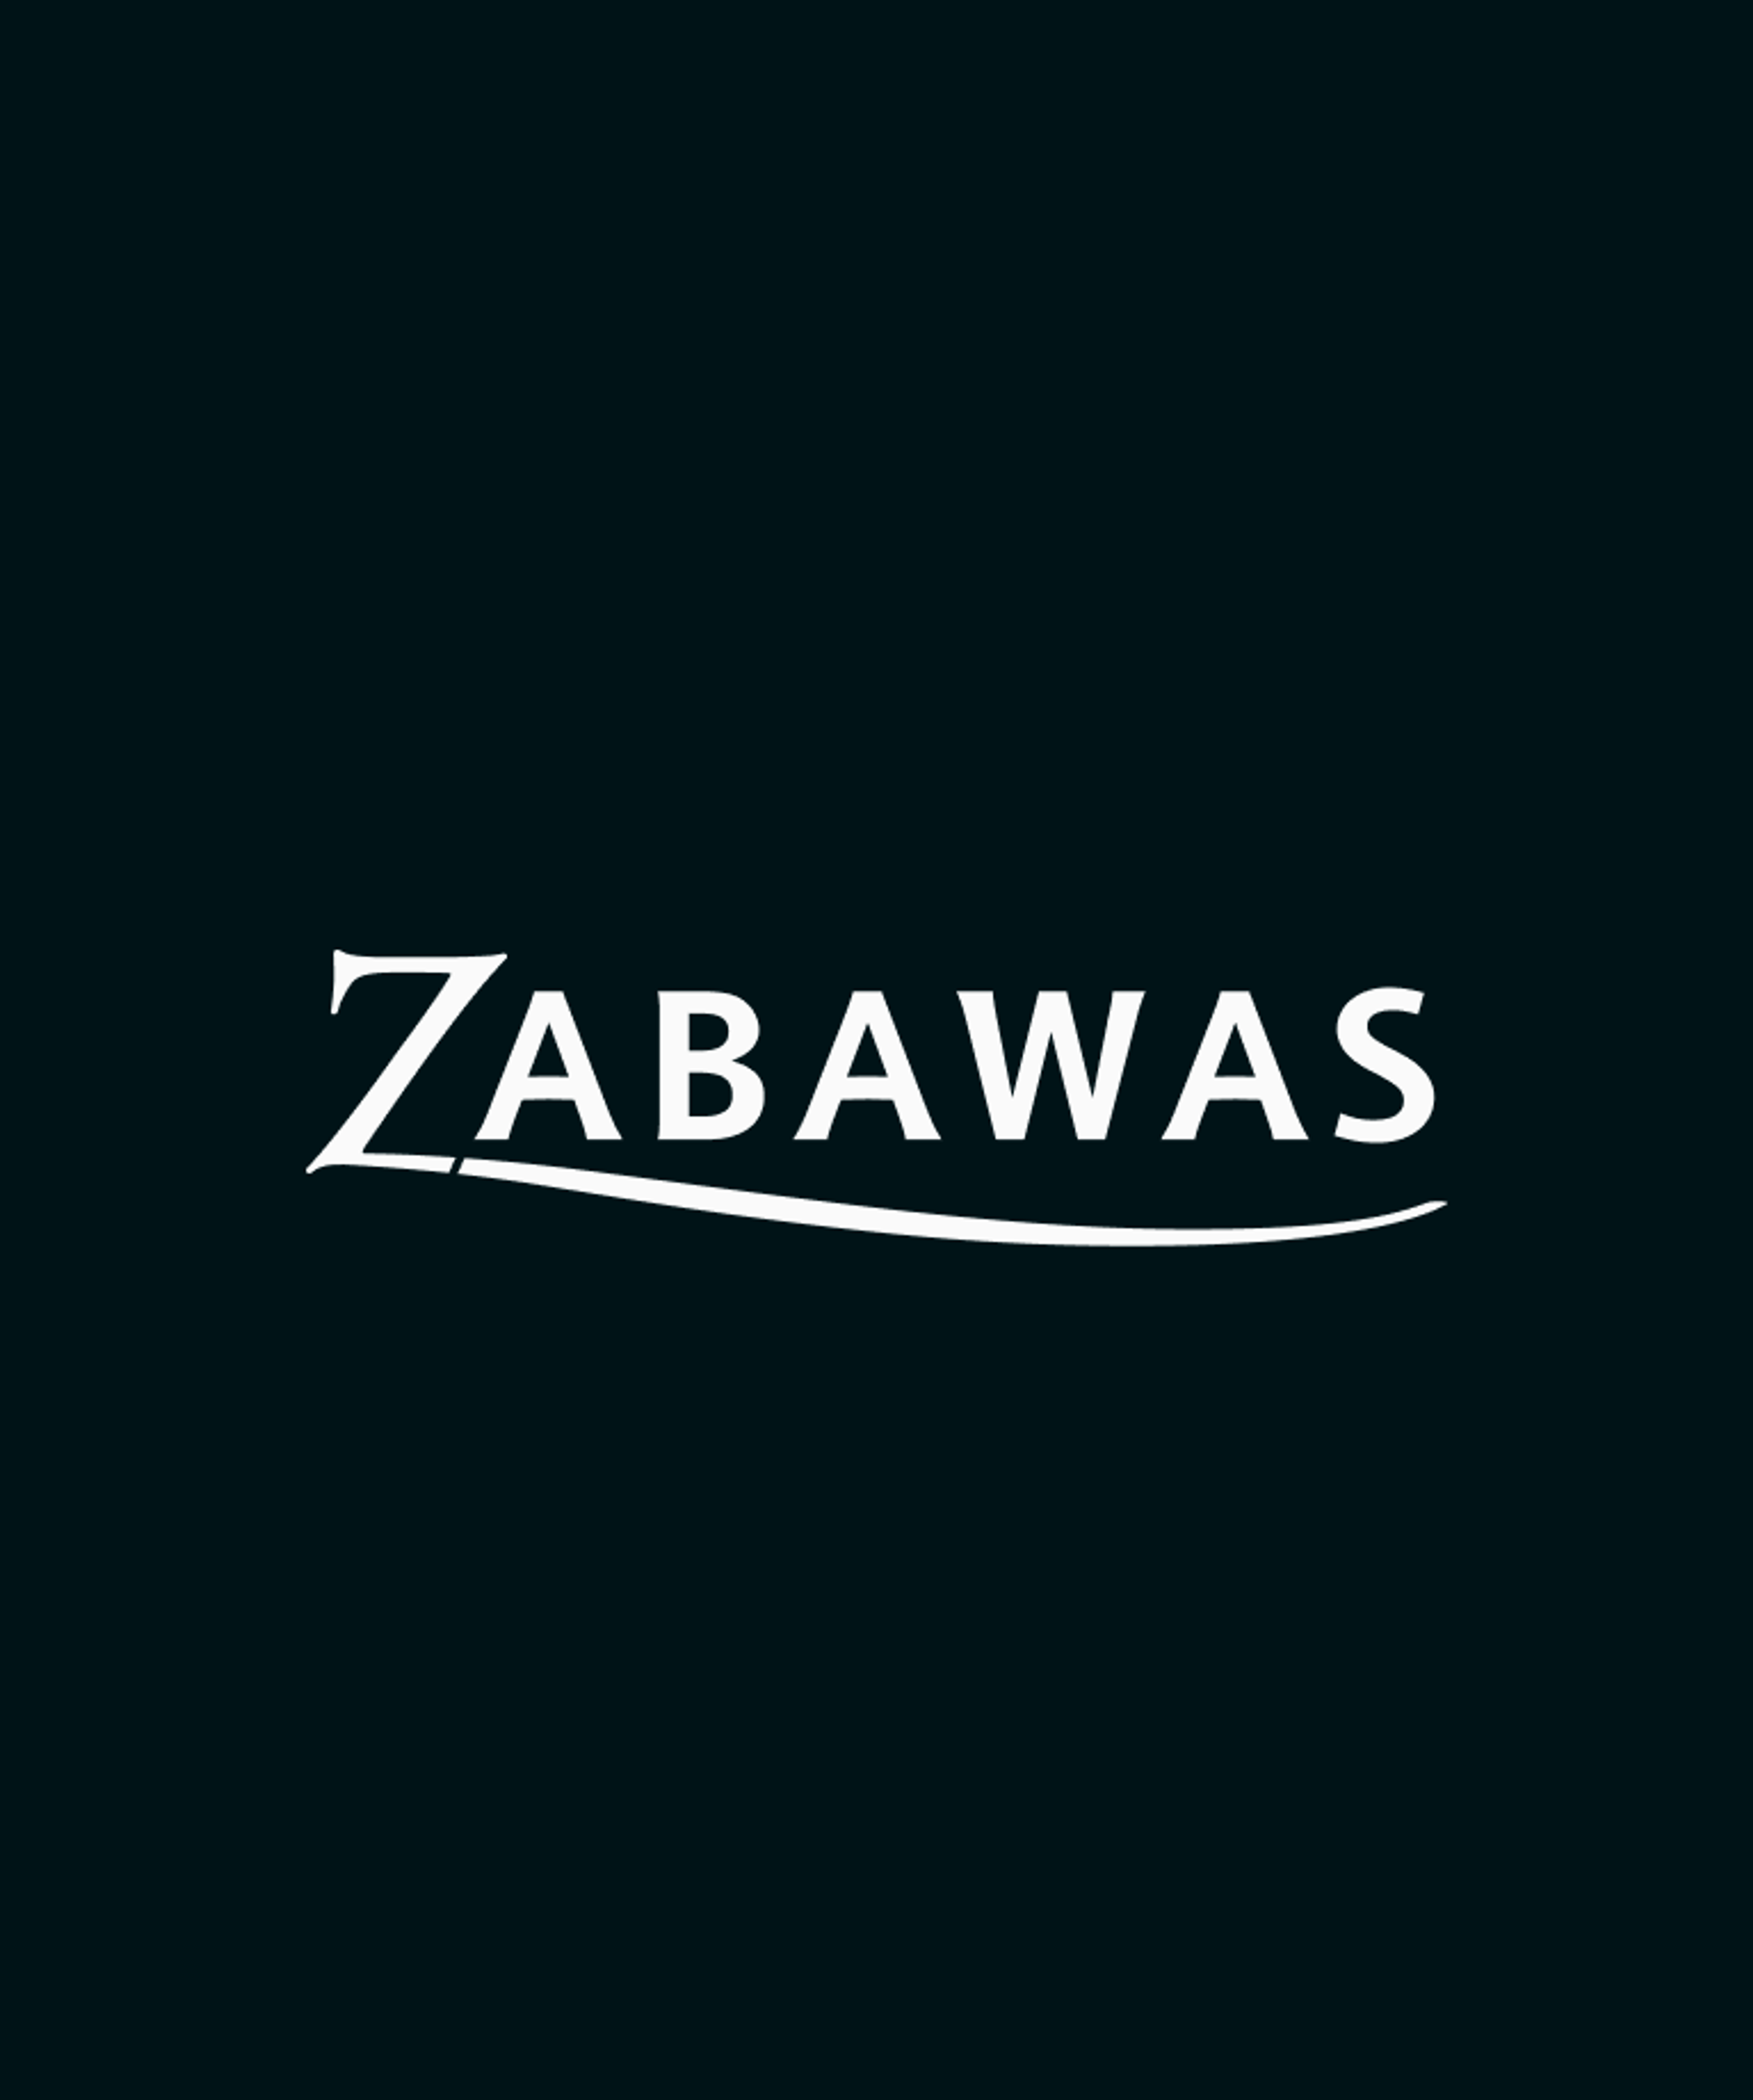 Zabawas logo